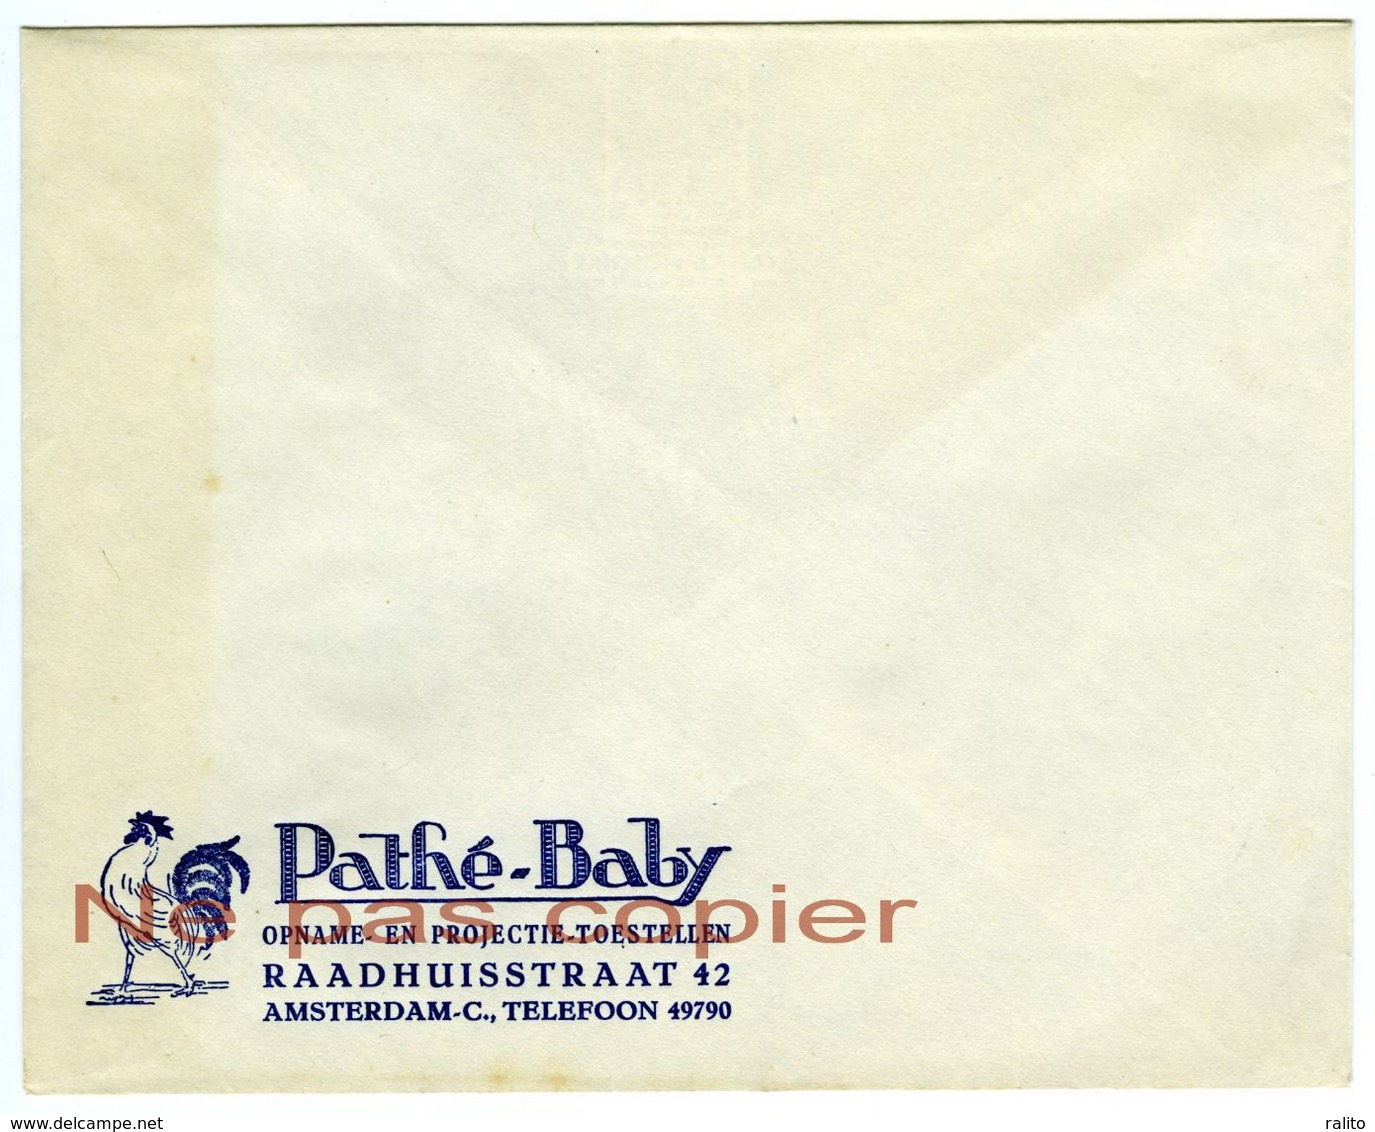 PATHE BABY CINEMA AMSTERDAM 6 documents